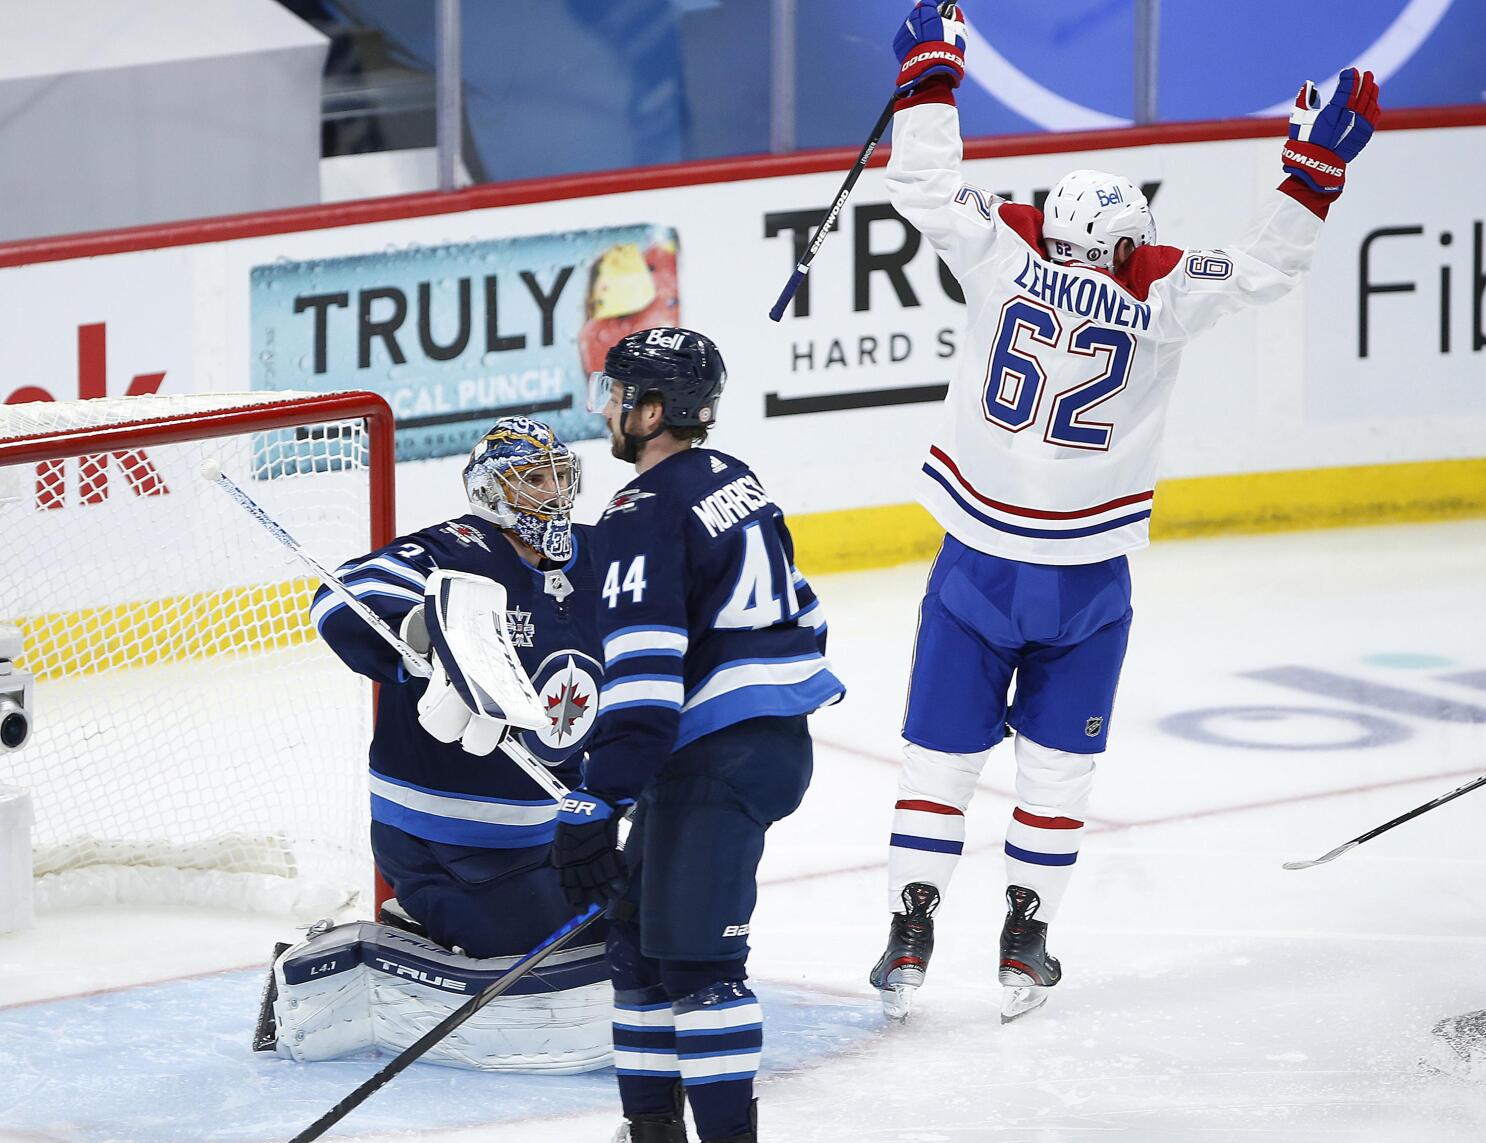 NHL playoffs: Habs' scoring leader Max Pacioretty to miss series